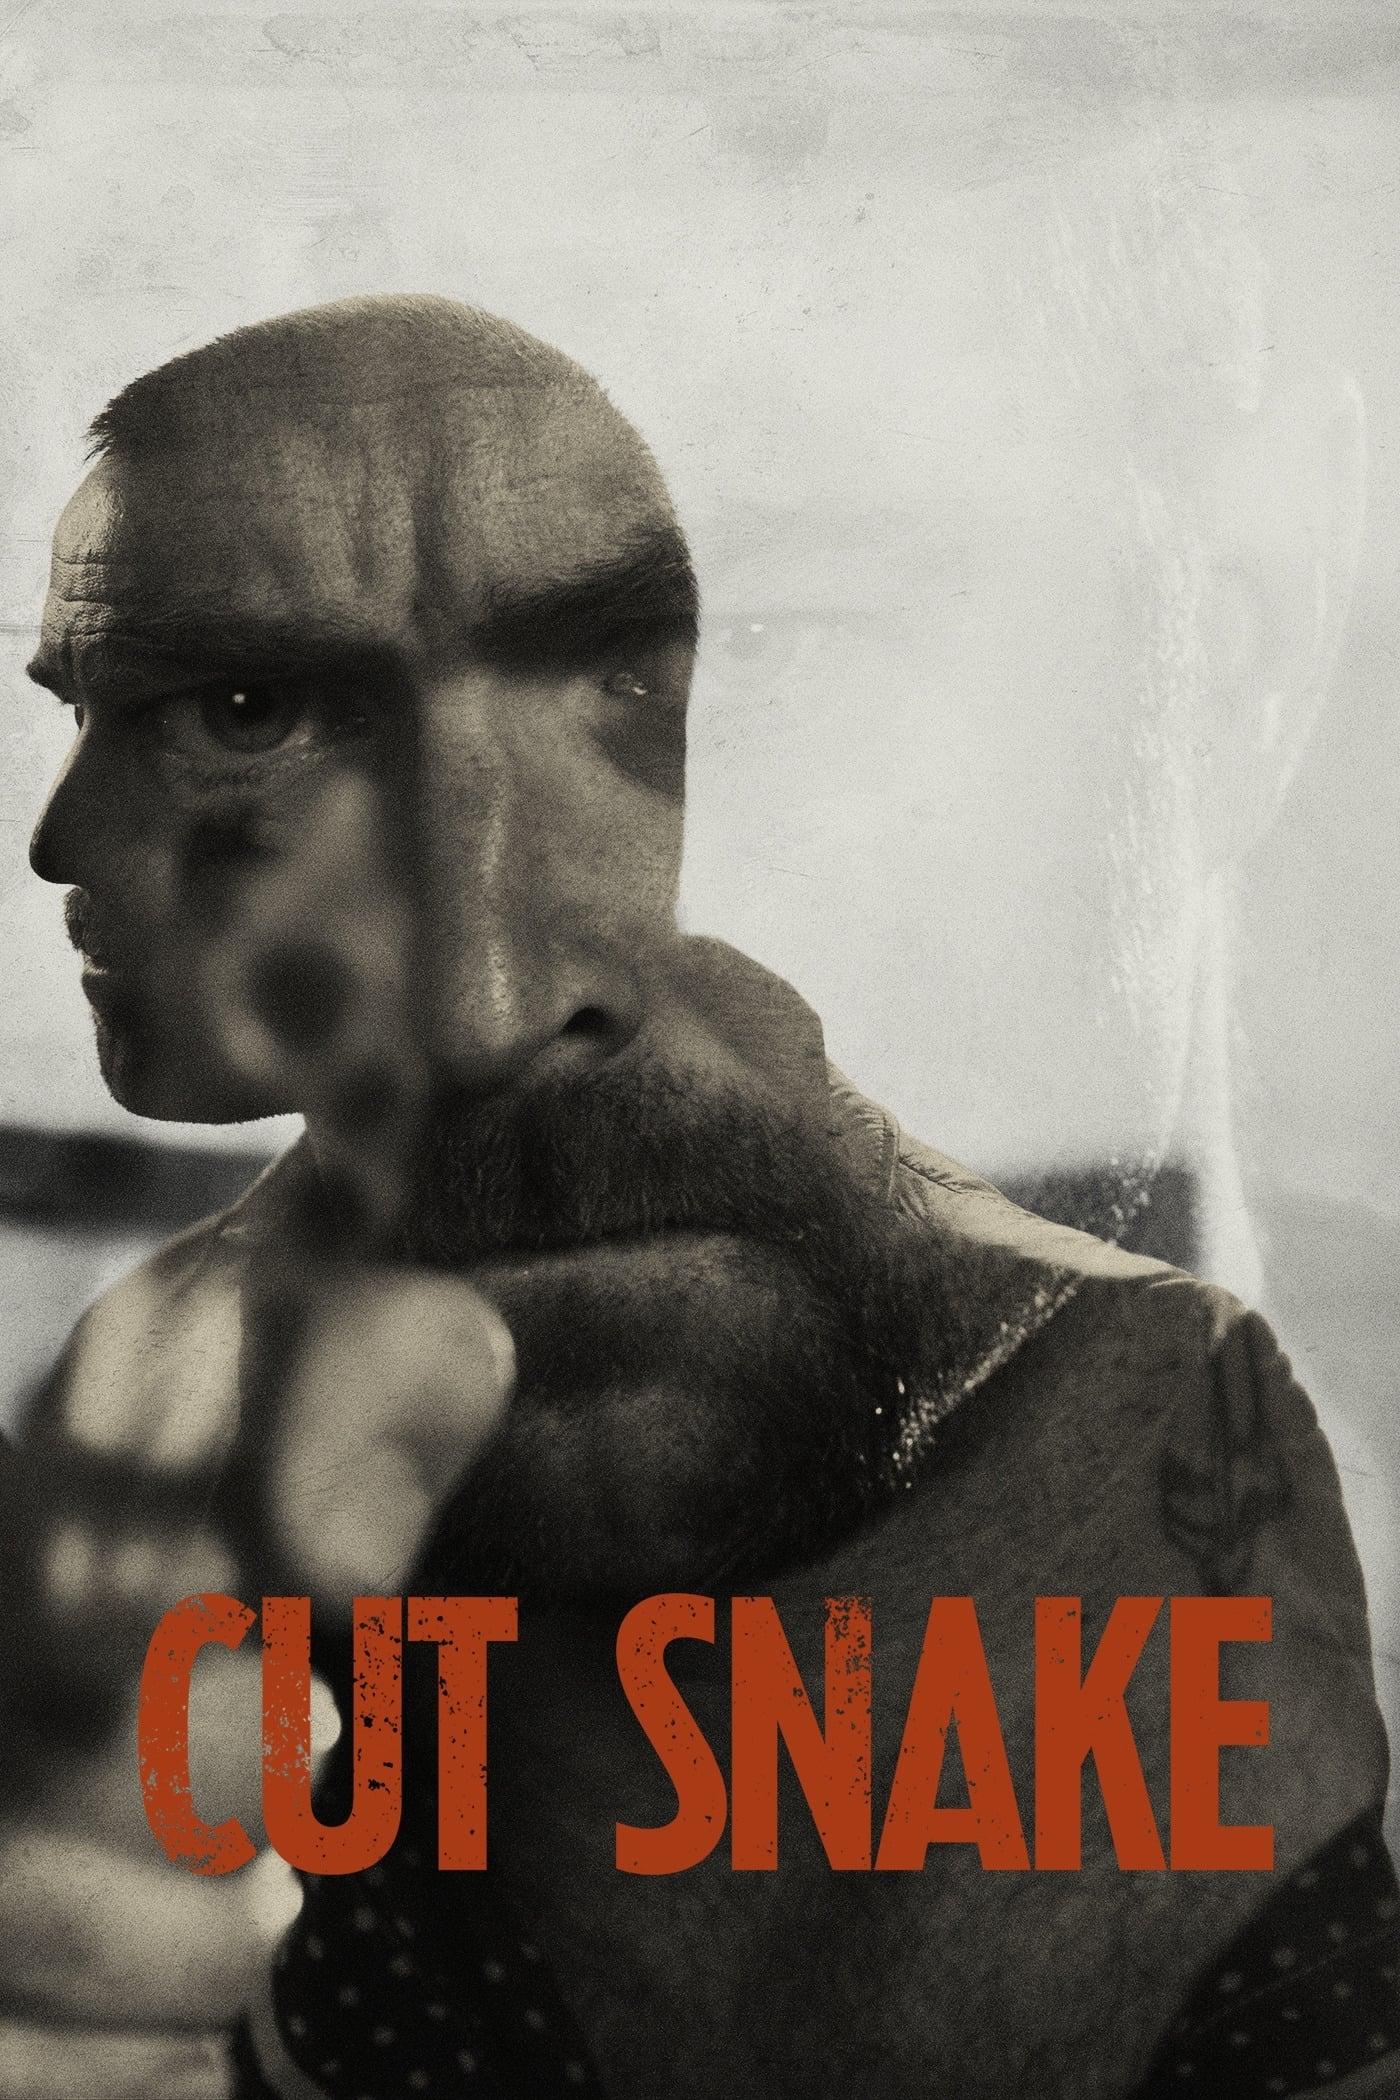 Cut Snake poster